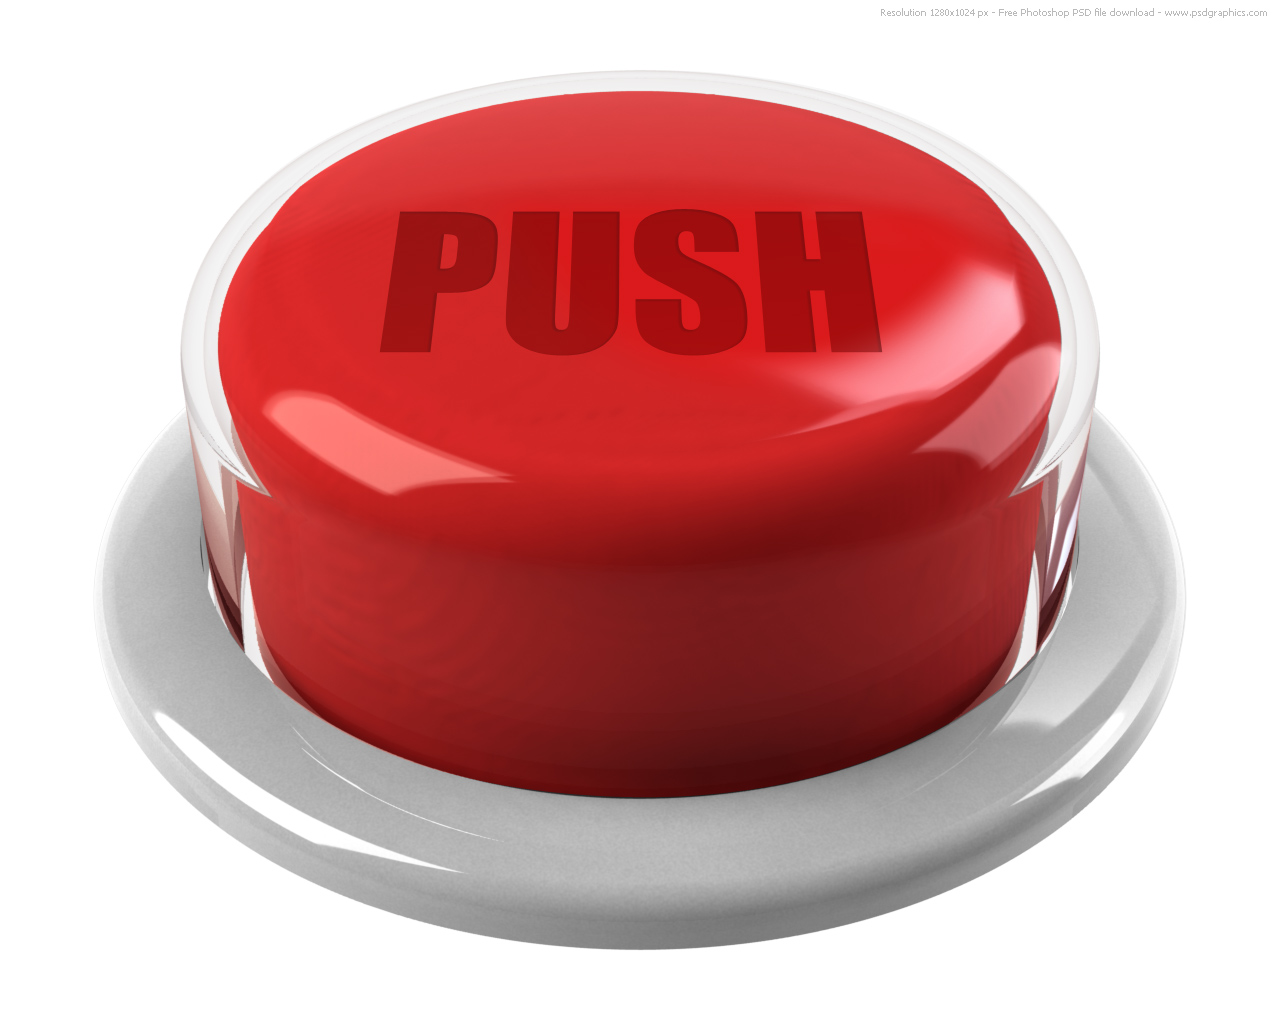 push素材-push图片-push素材图片下载-觅知网